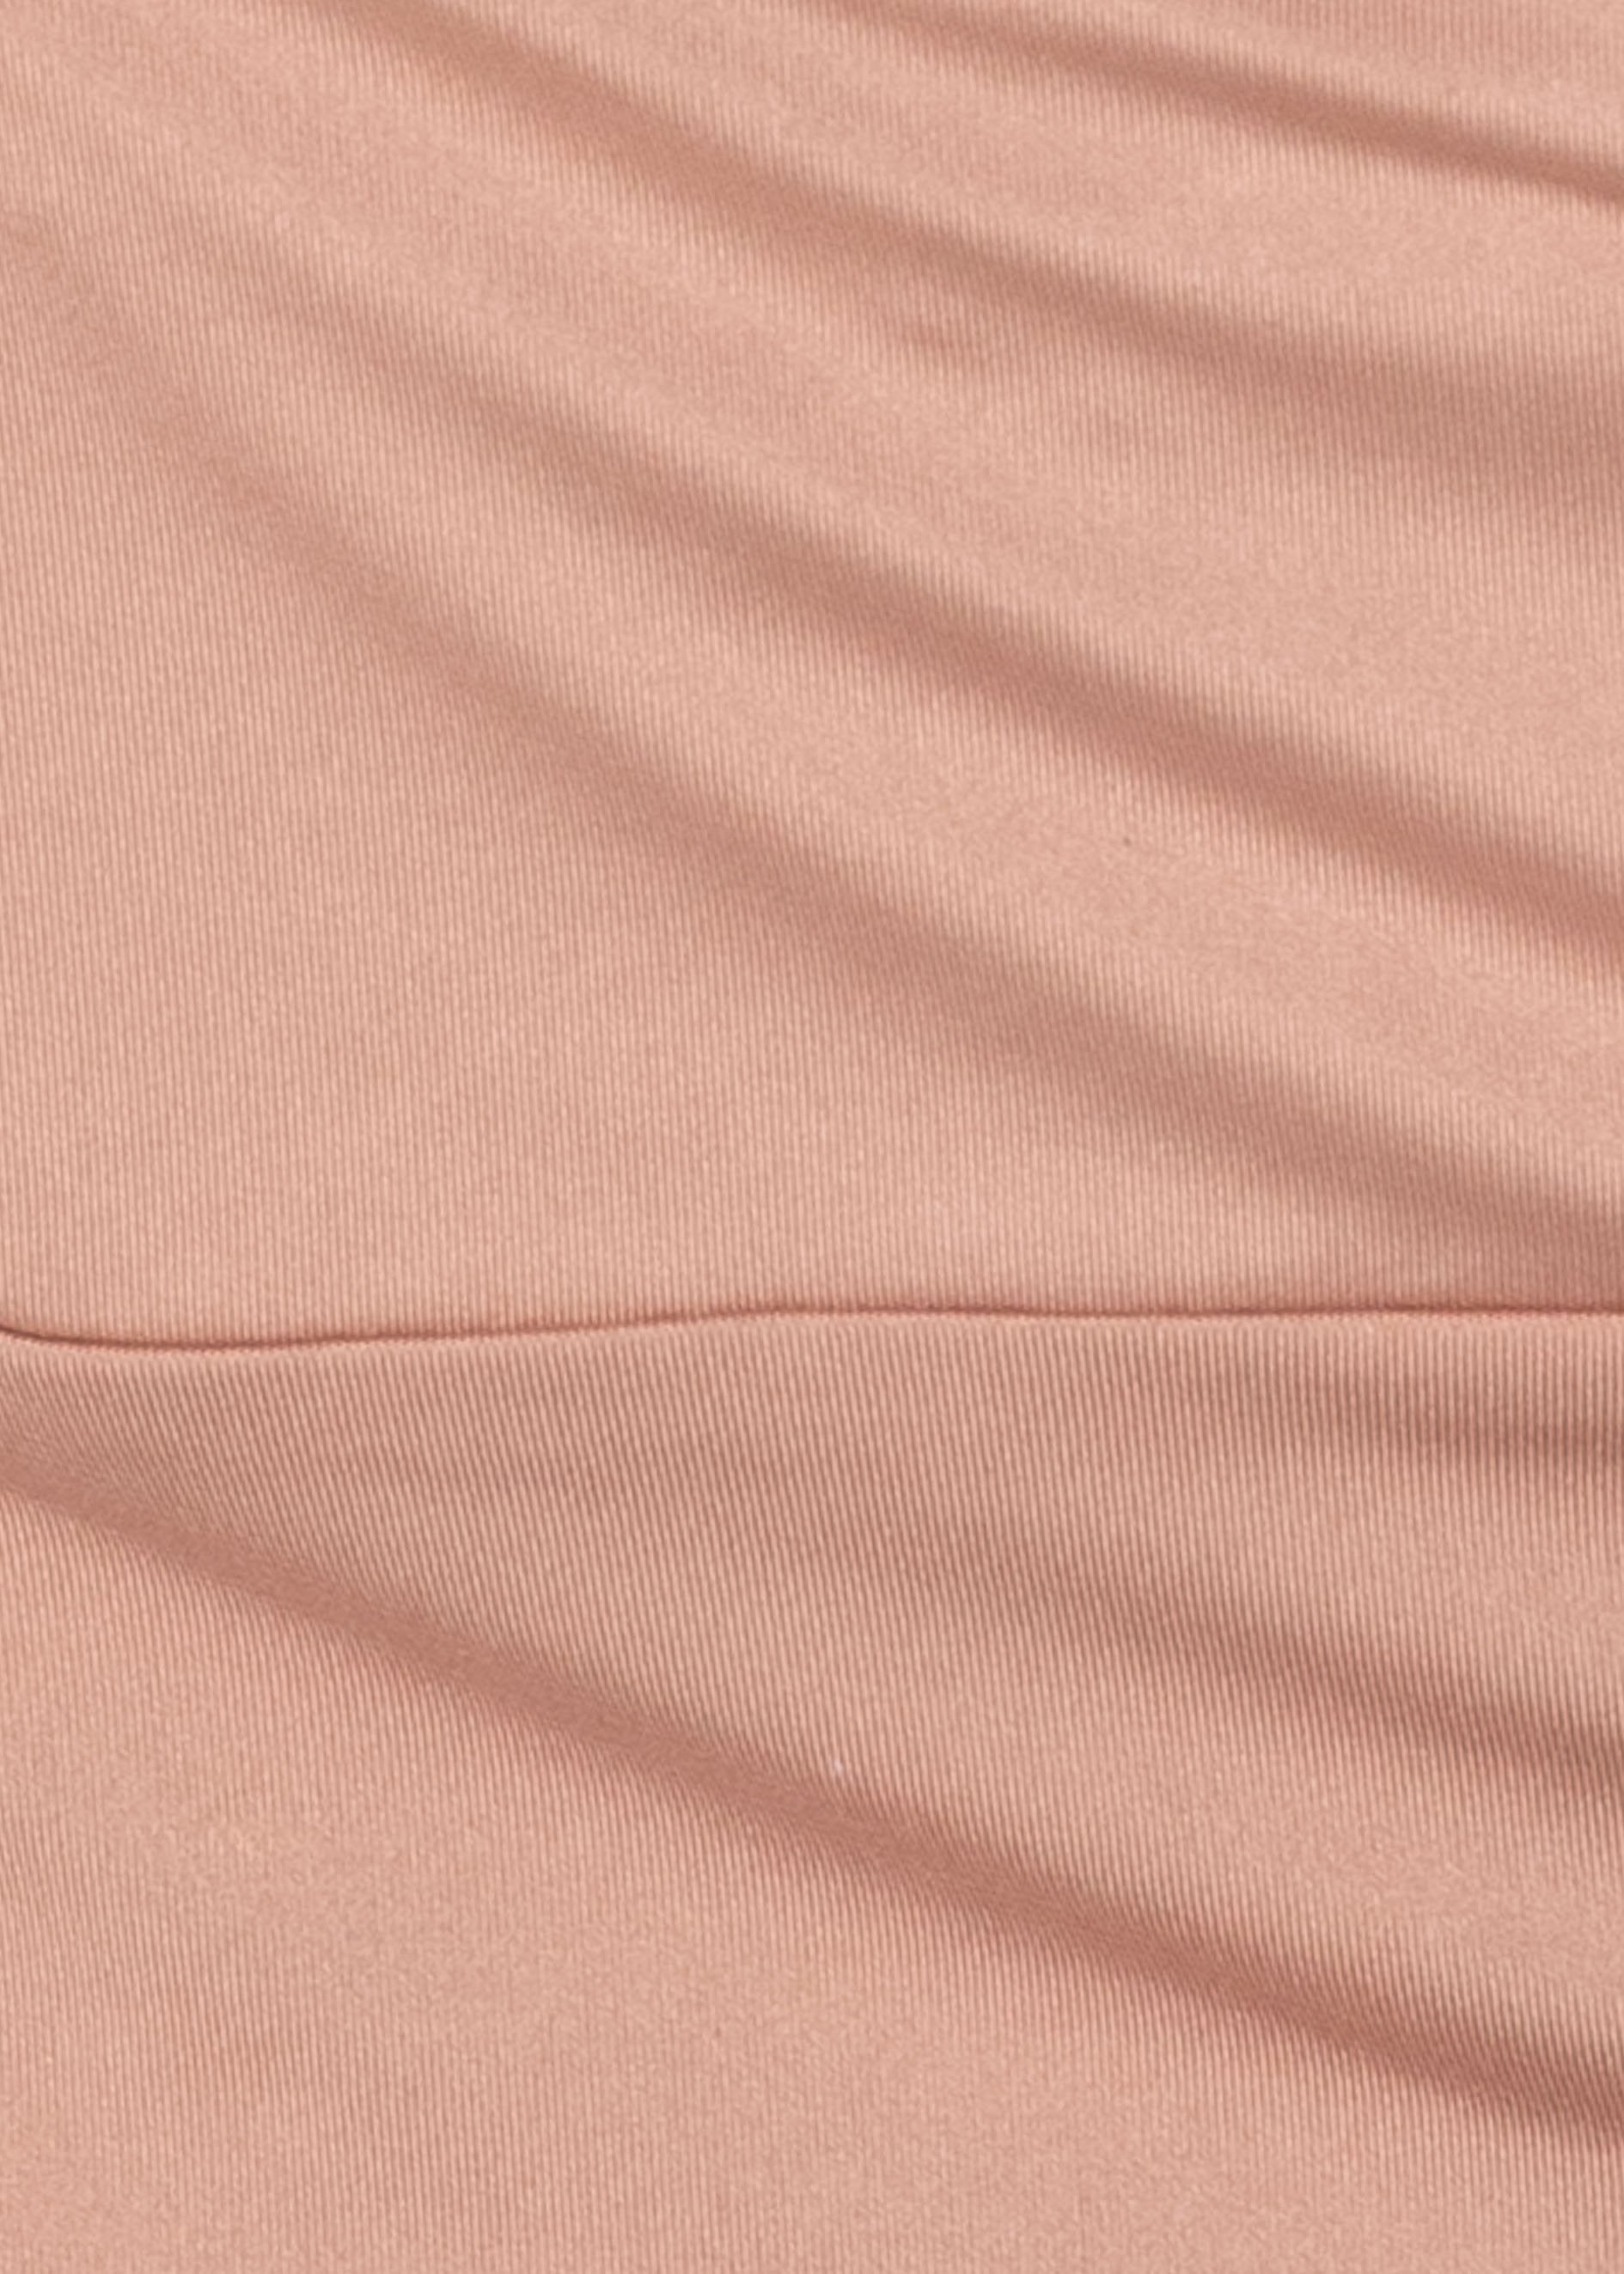 Dakota Crop - Dusty Pink